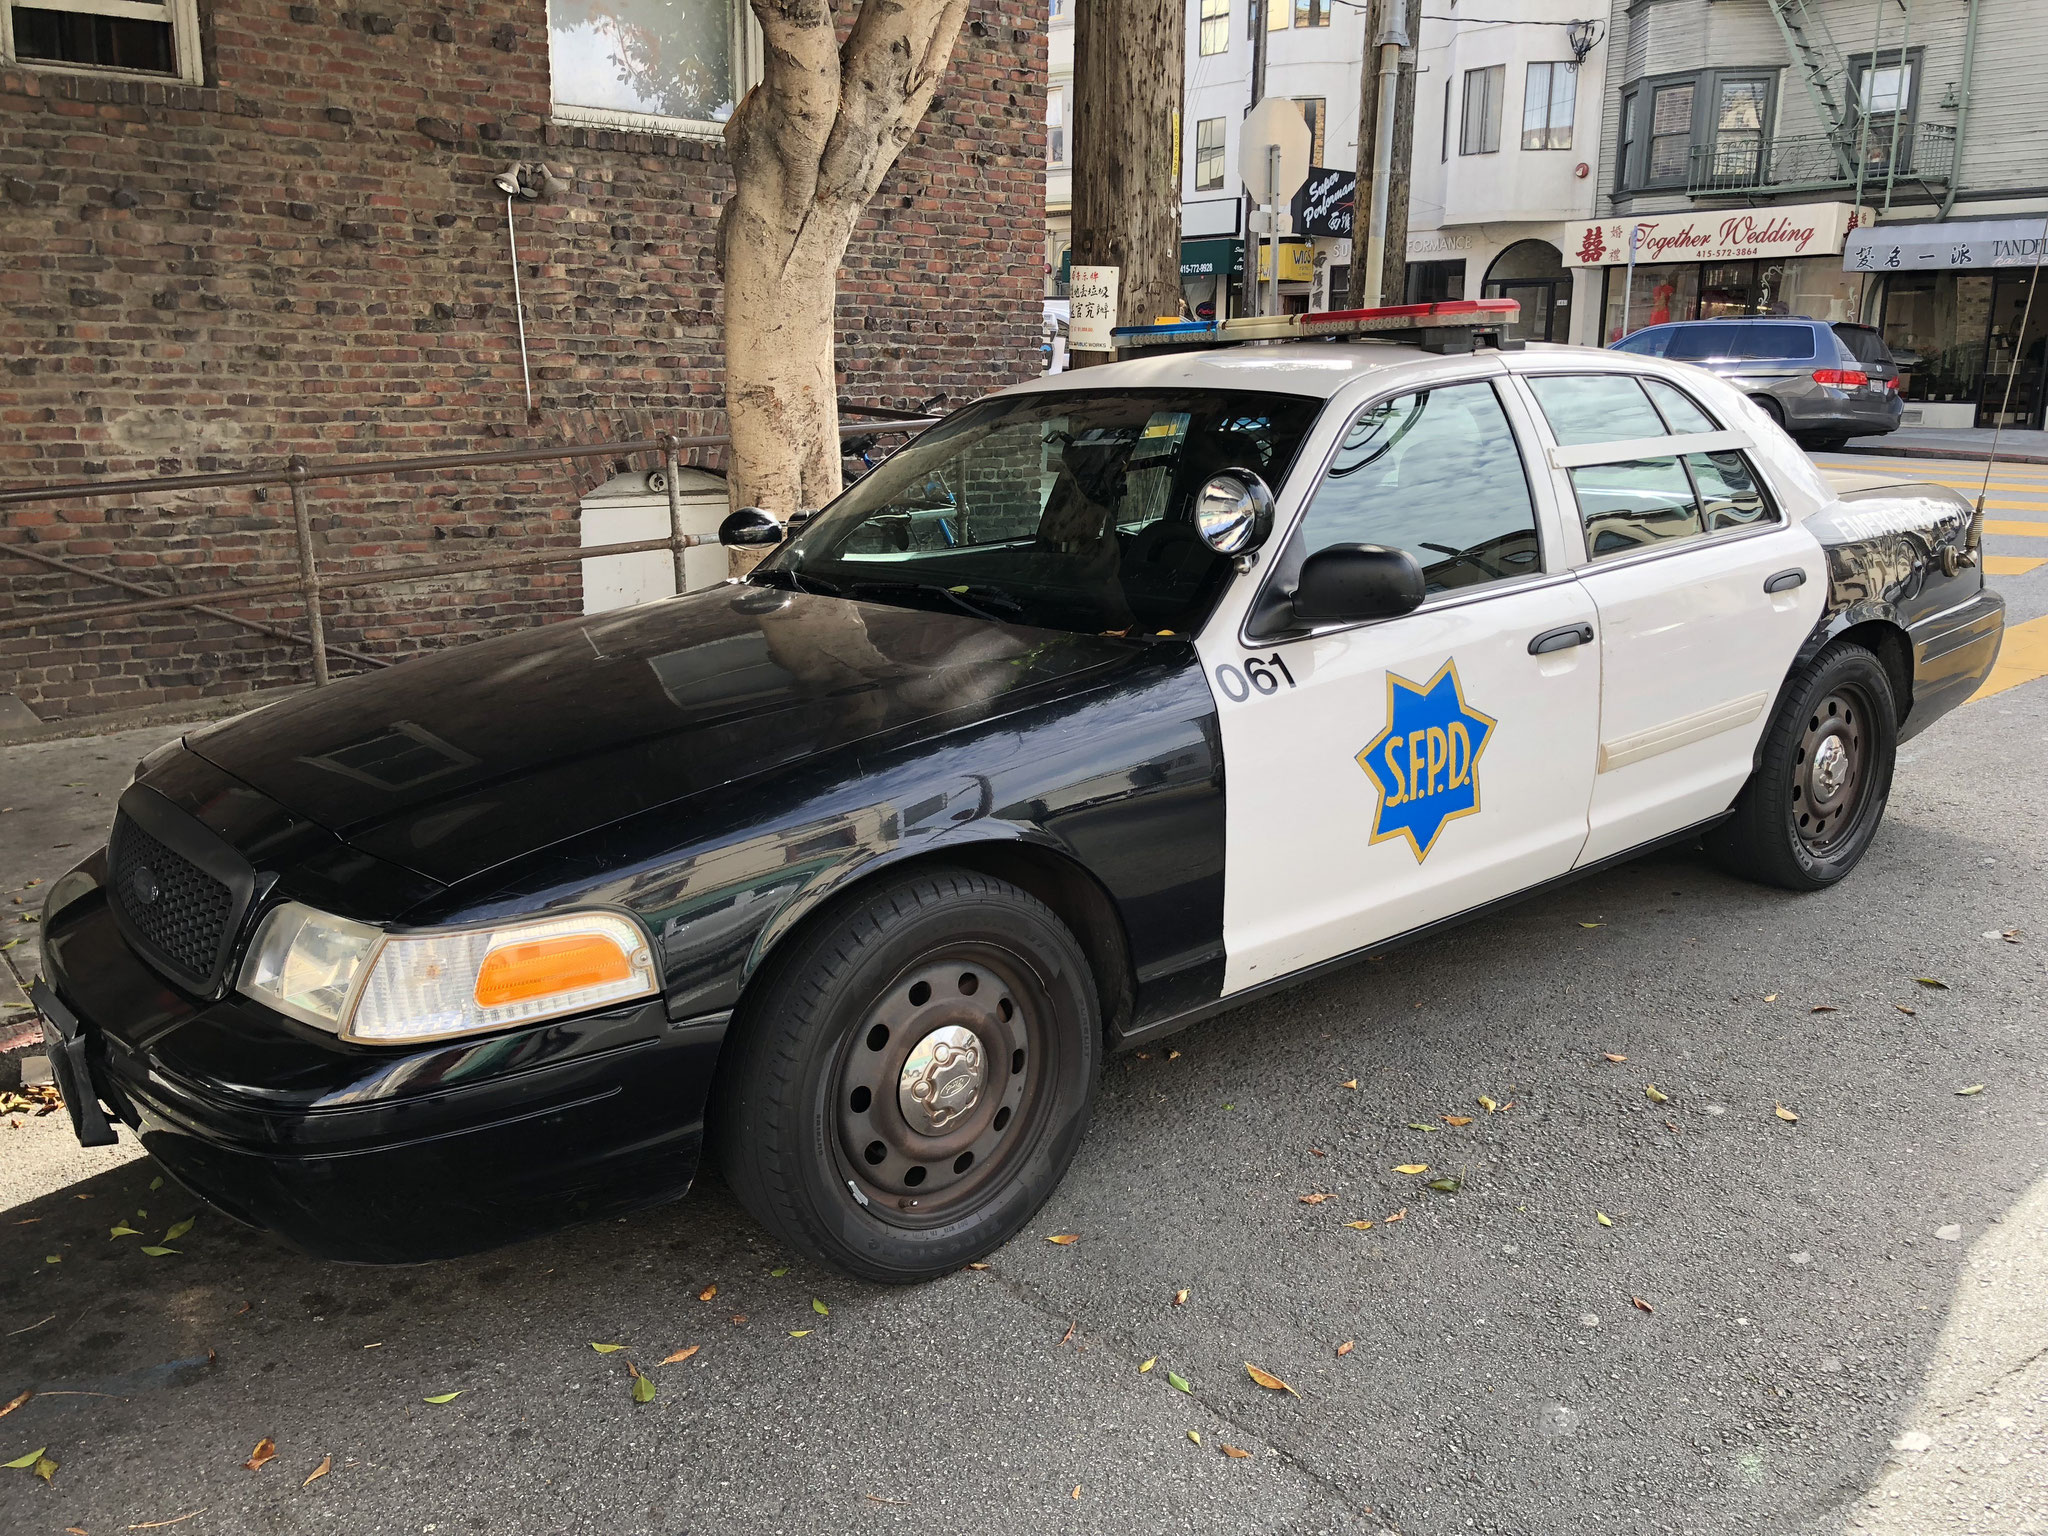 SFPD - San Francisco Police Department